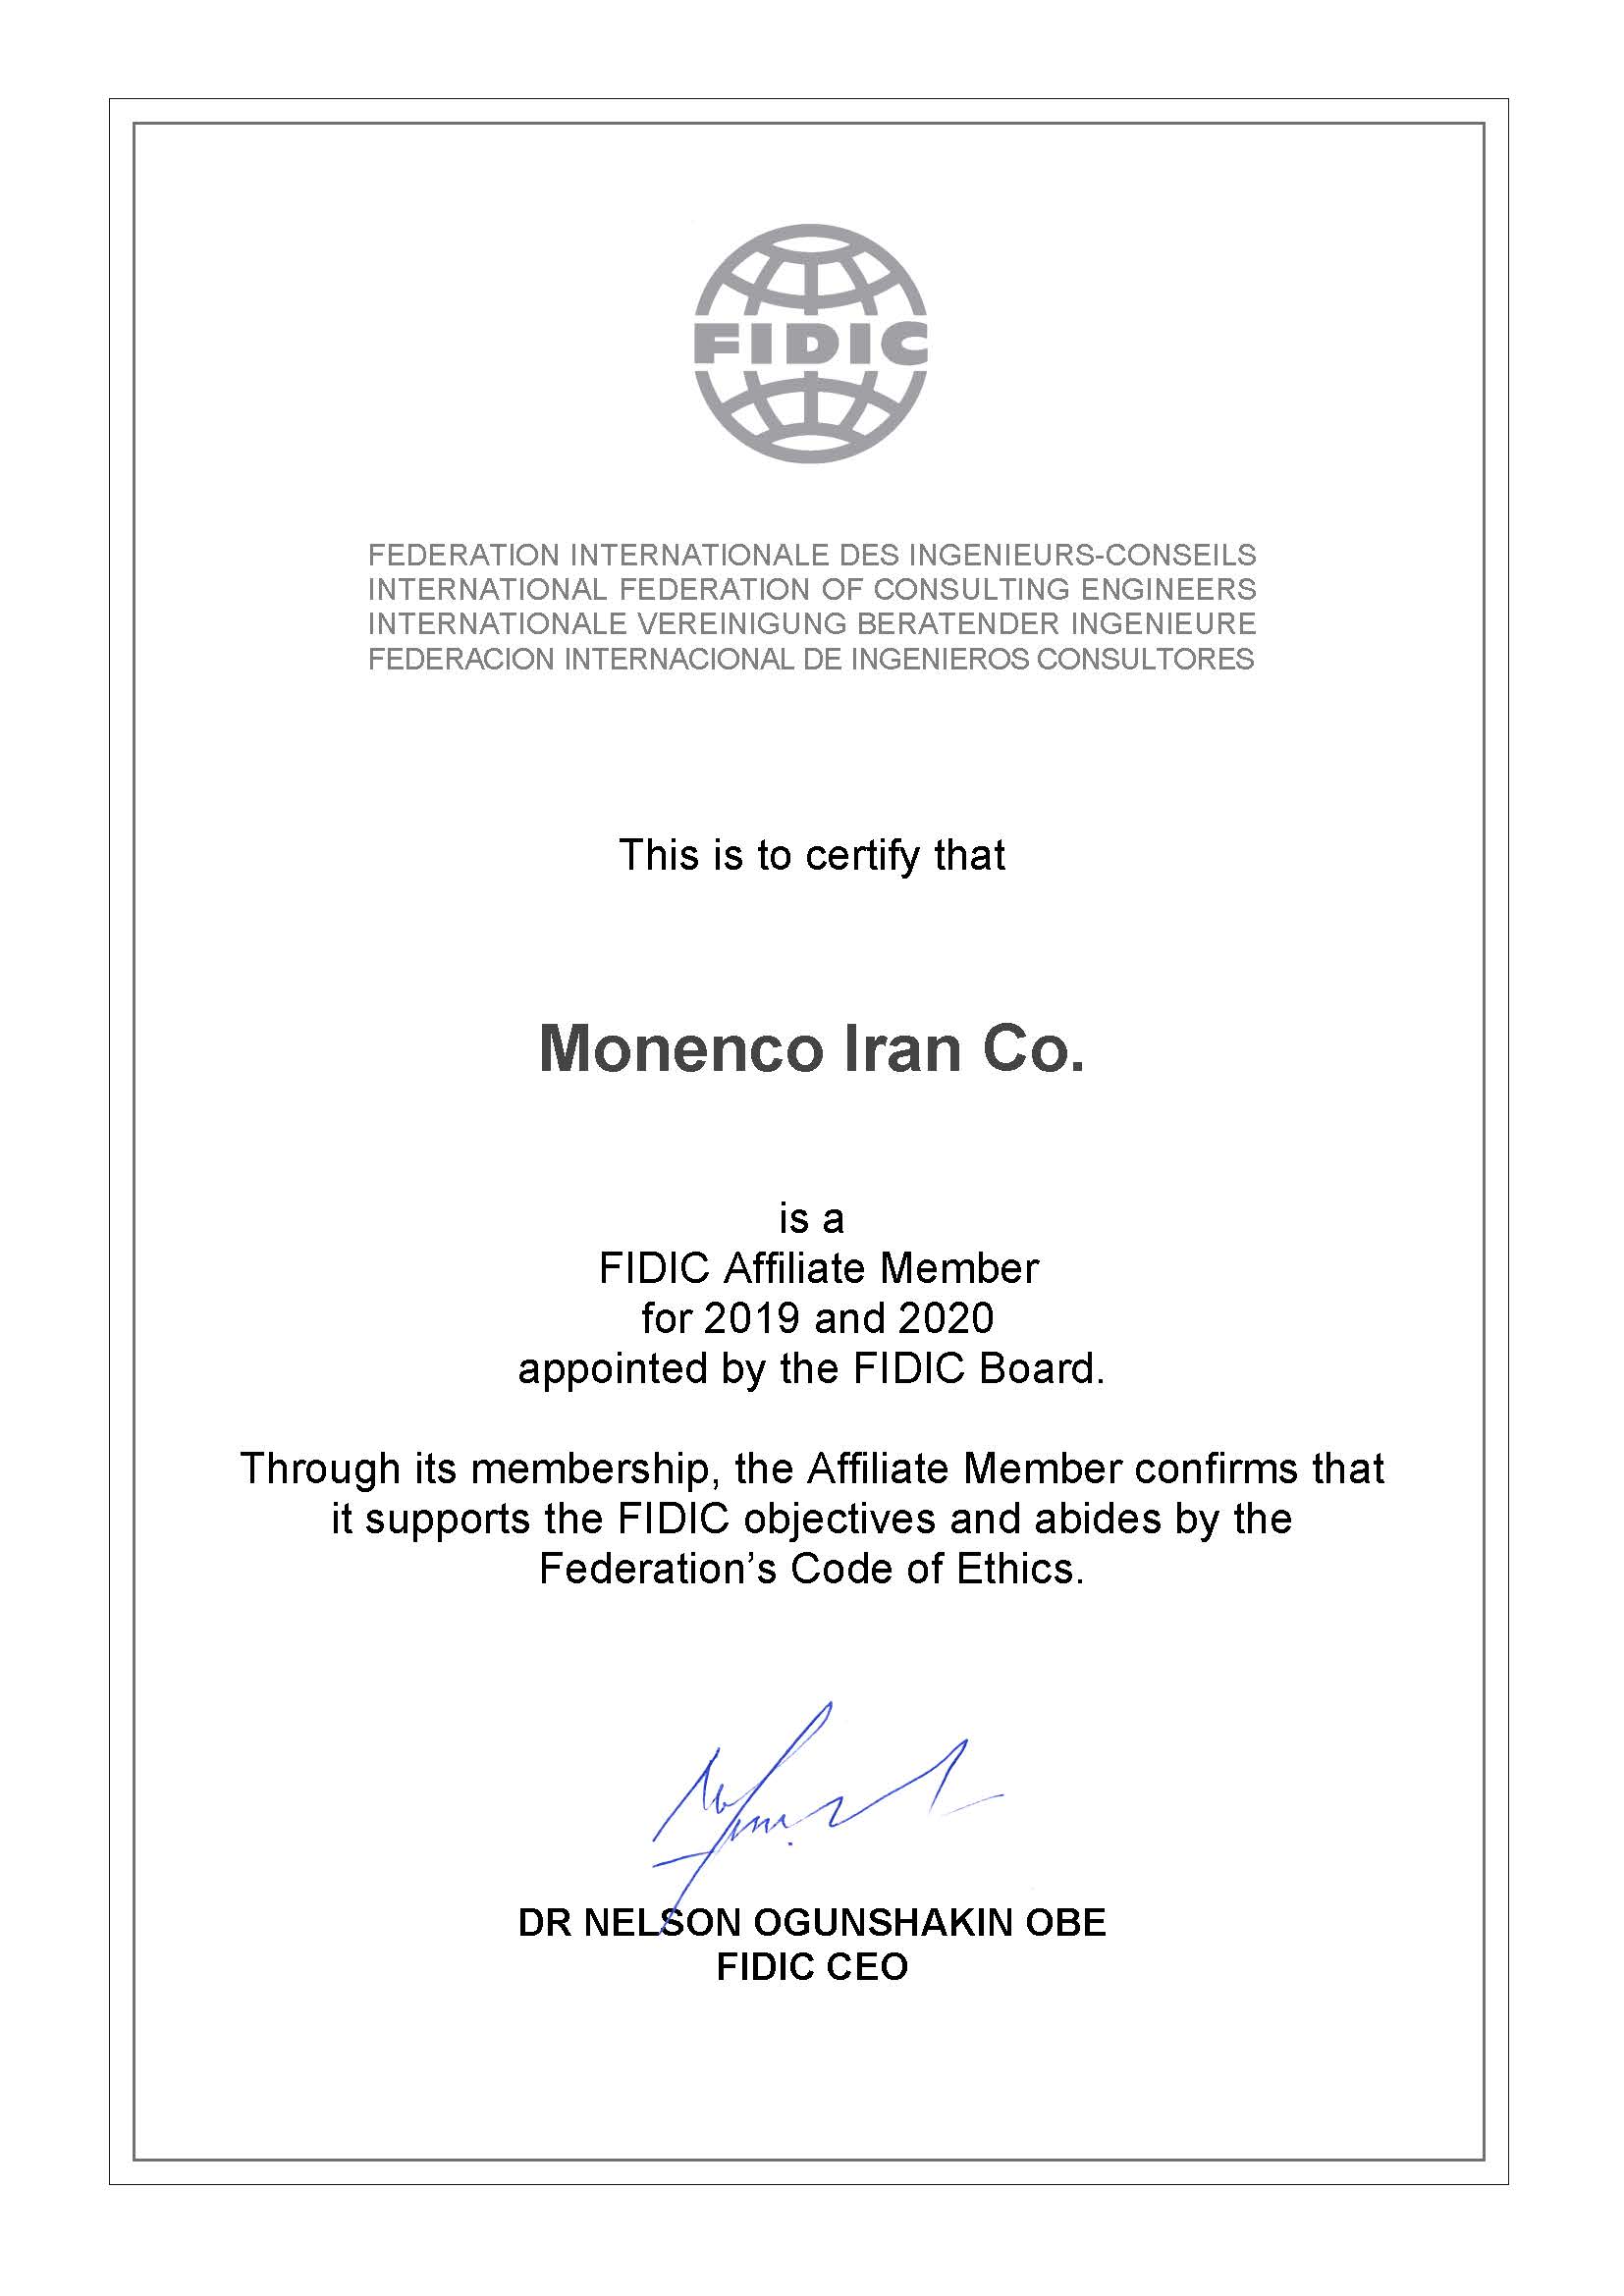 Monenco Iran has become a Affiliate Member of FIDIC